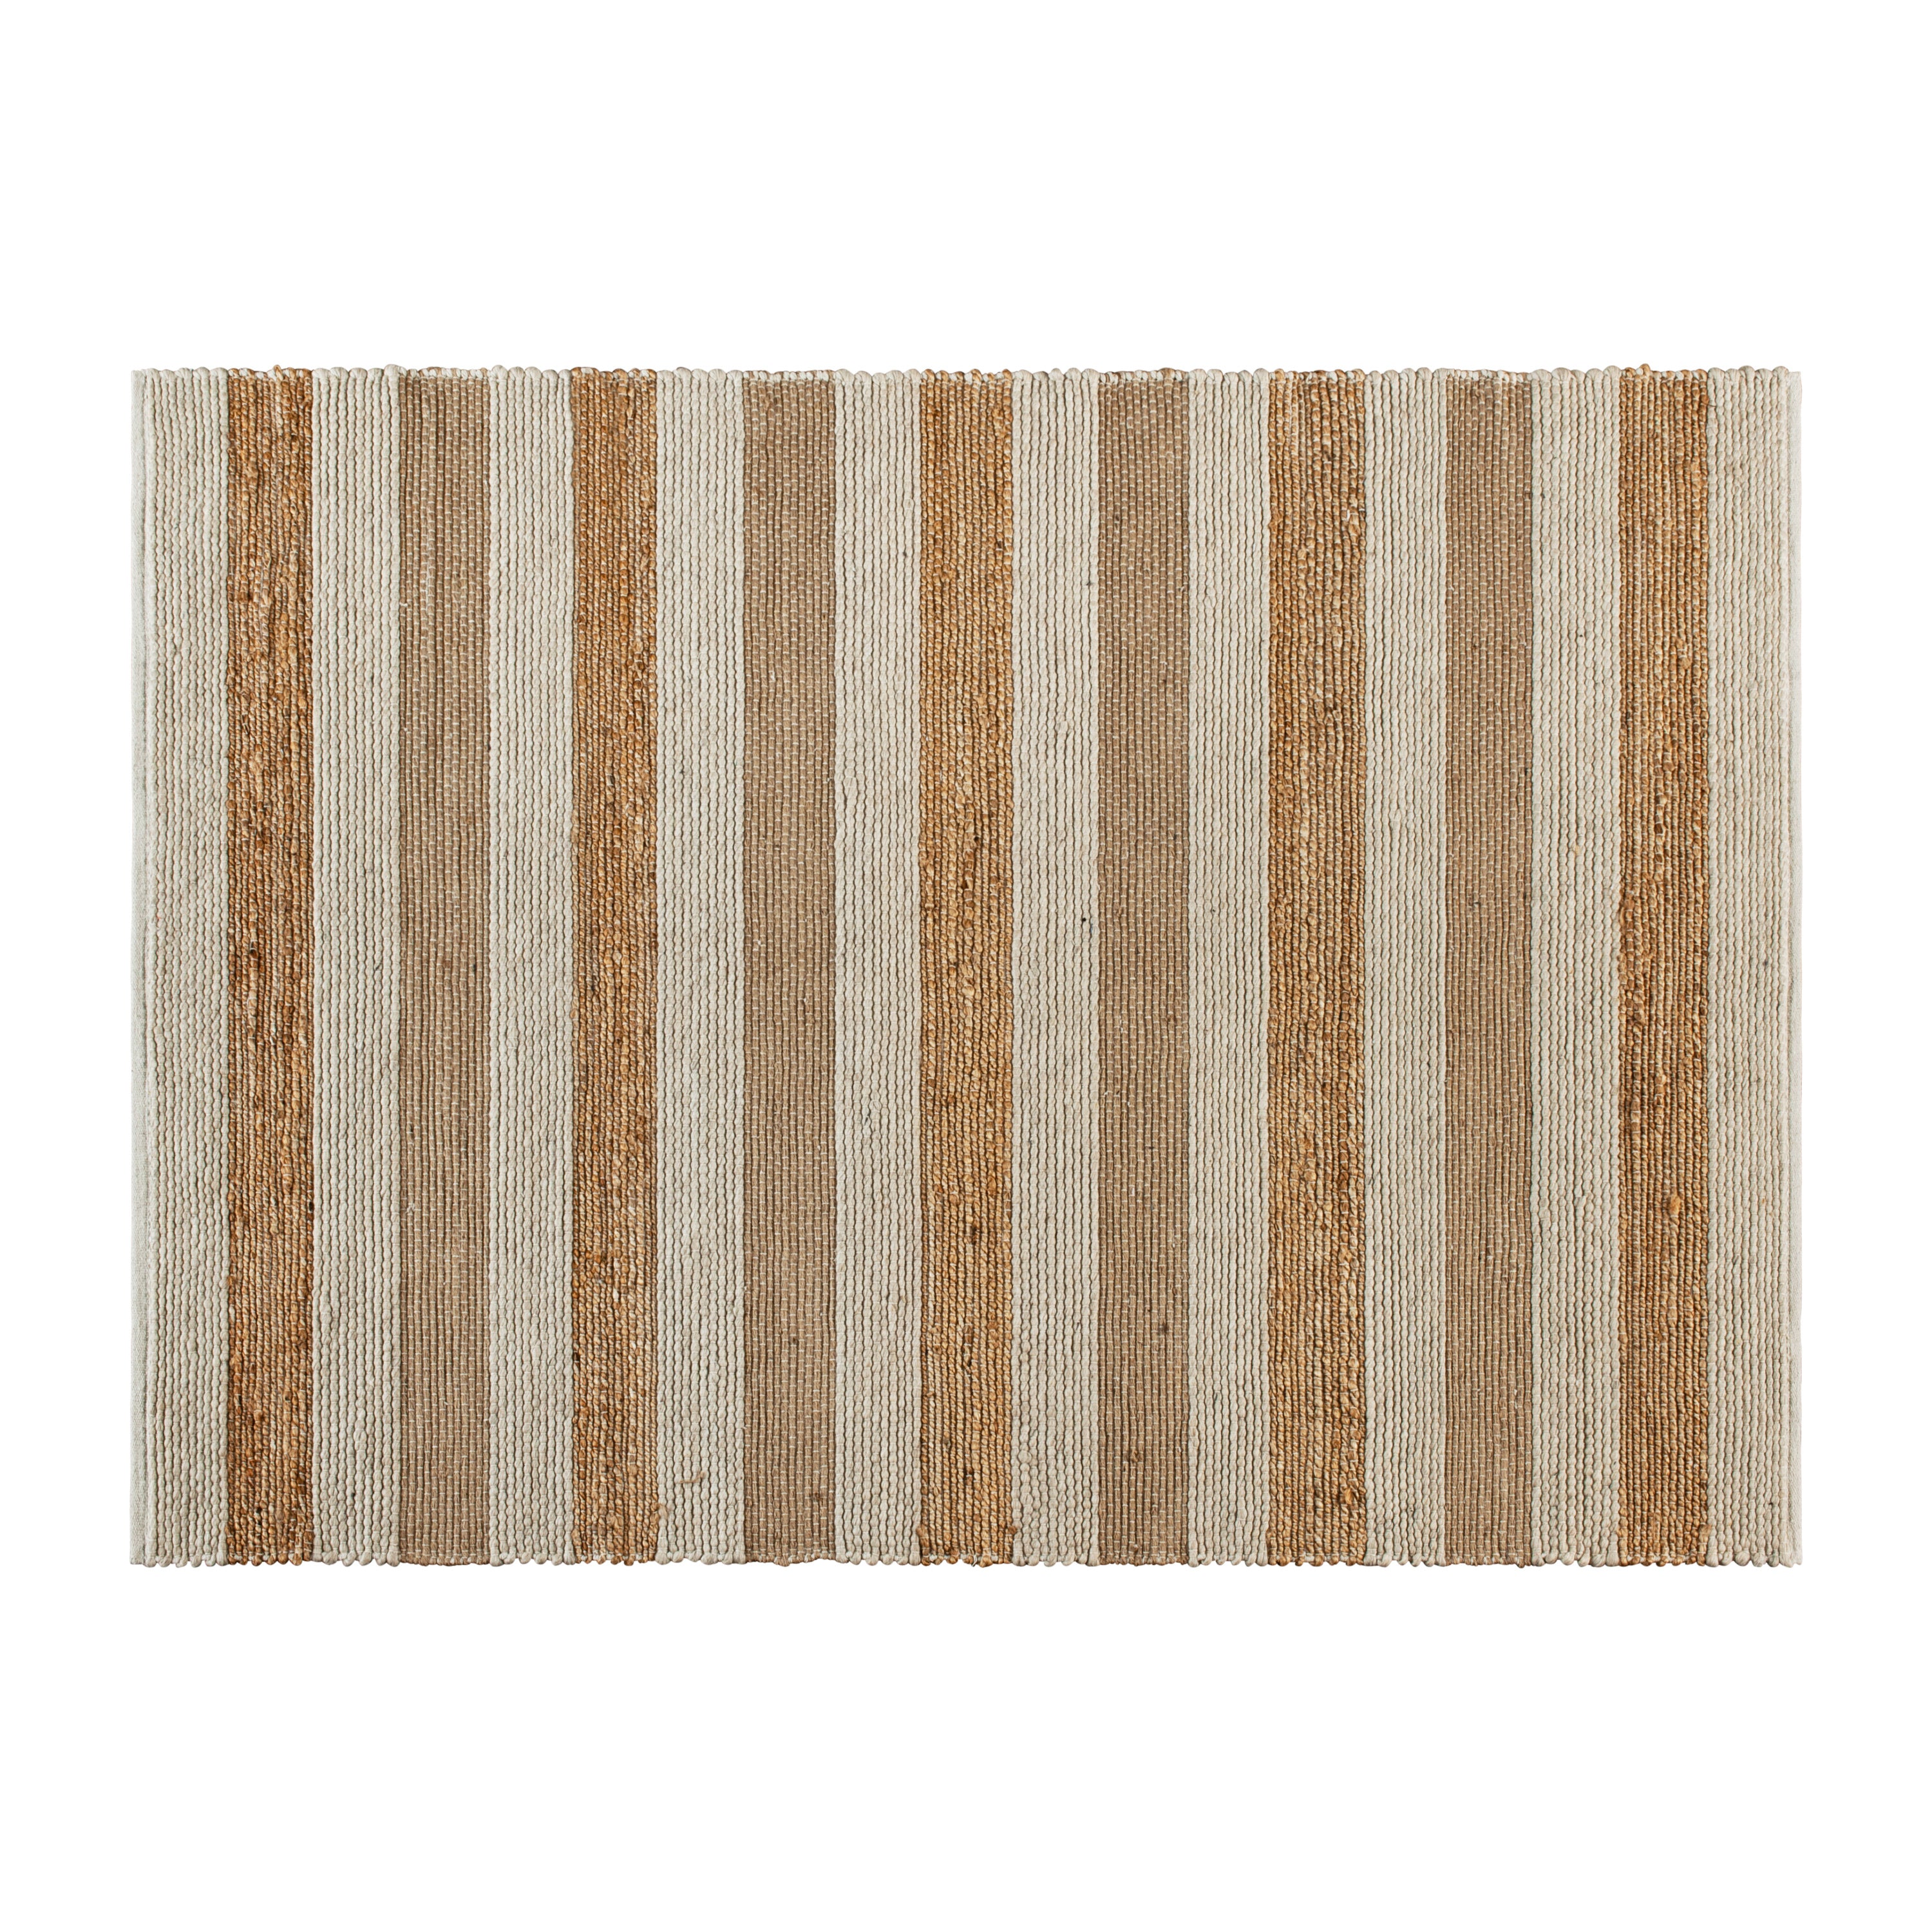 Handwoven Striped Jute Blend Area Rug in Tones-Area Rug-Flash Furniture-Wall2Wall Furnishings